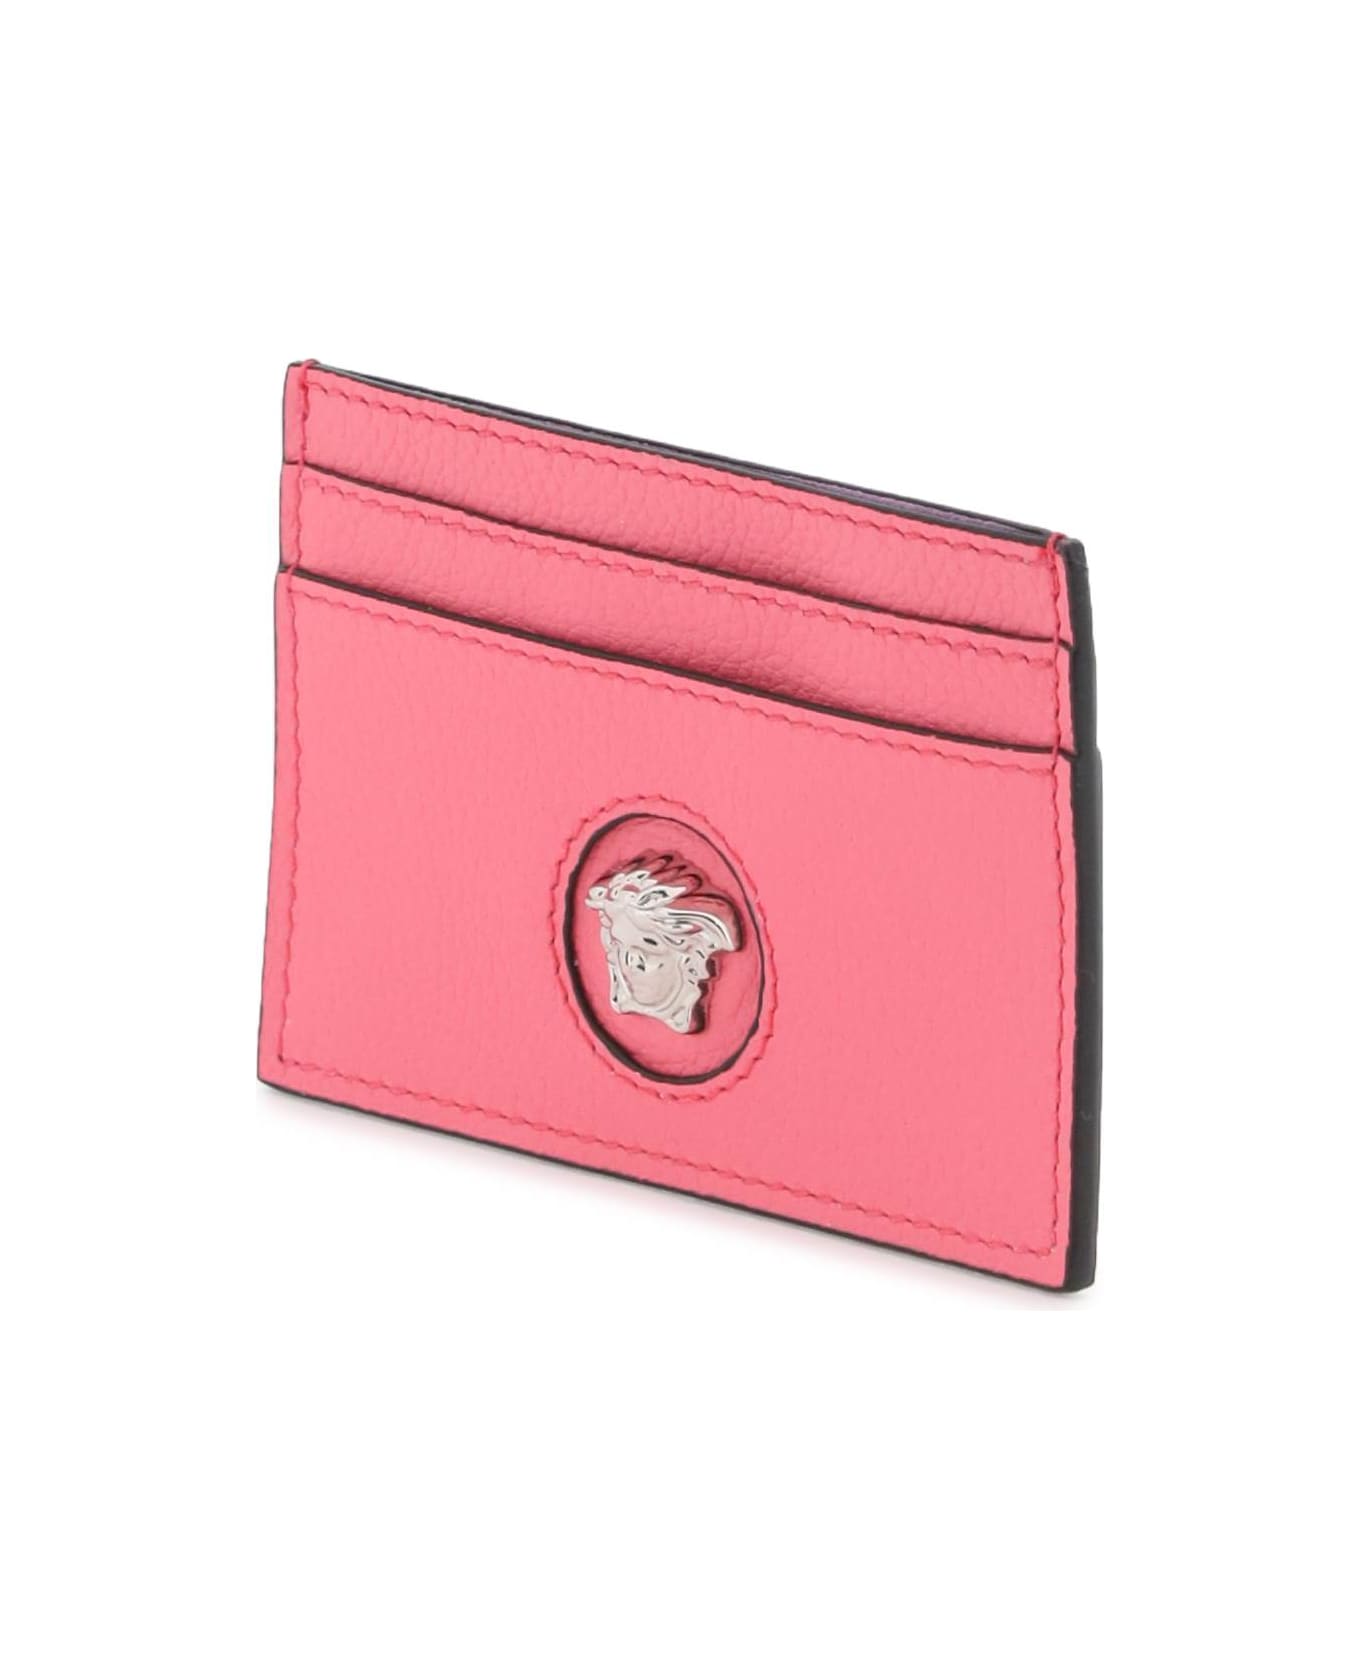 Versace Jellyfish Card Holder - Flamingo/palladio 財布